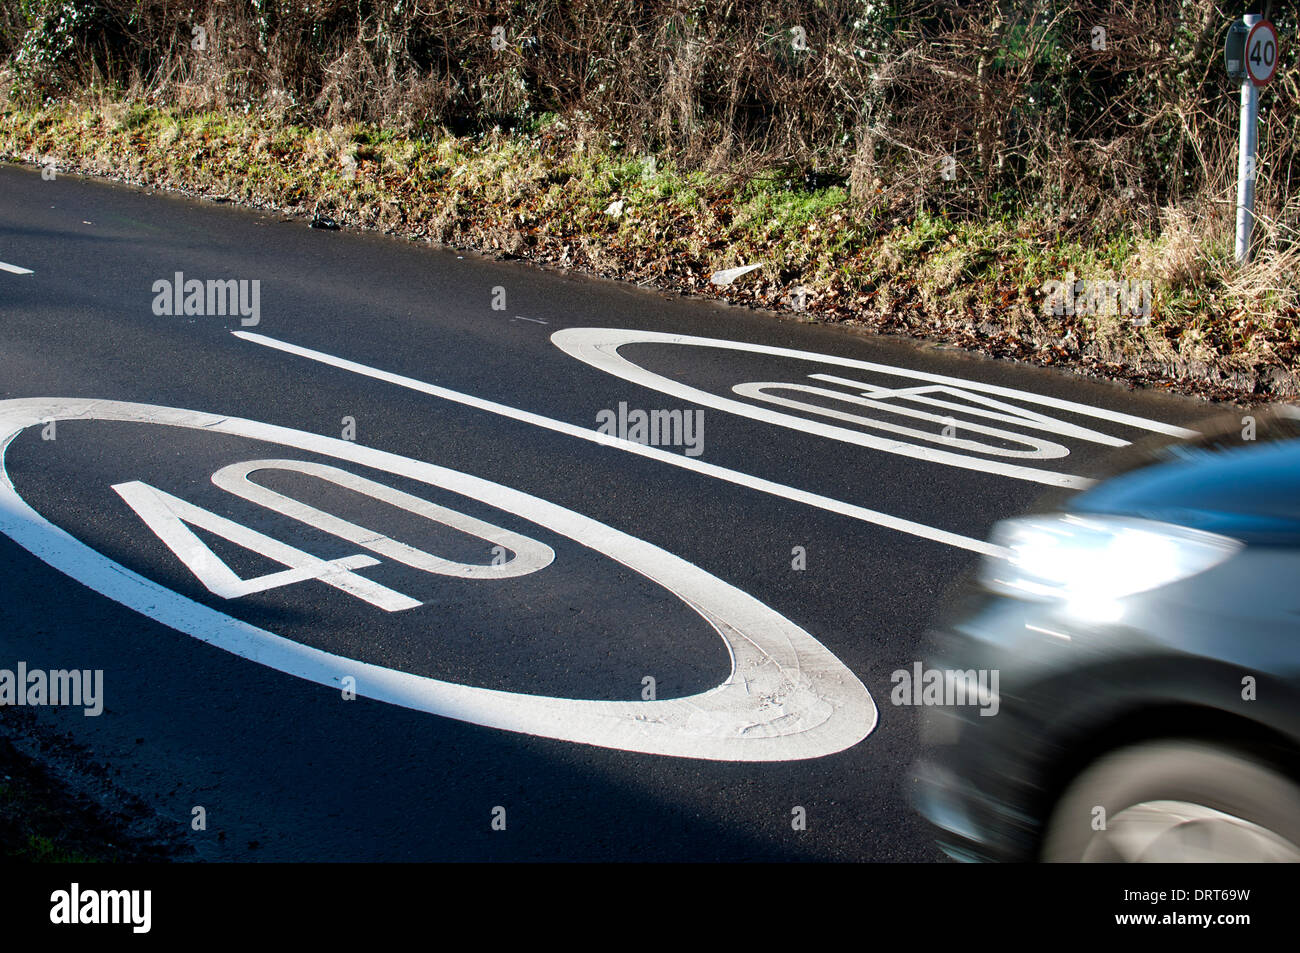 40 mph speed limit markings on road, UK Stock Photo